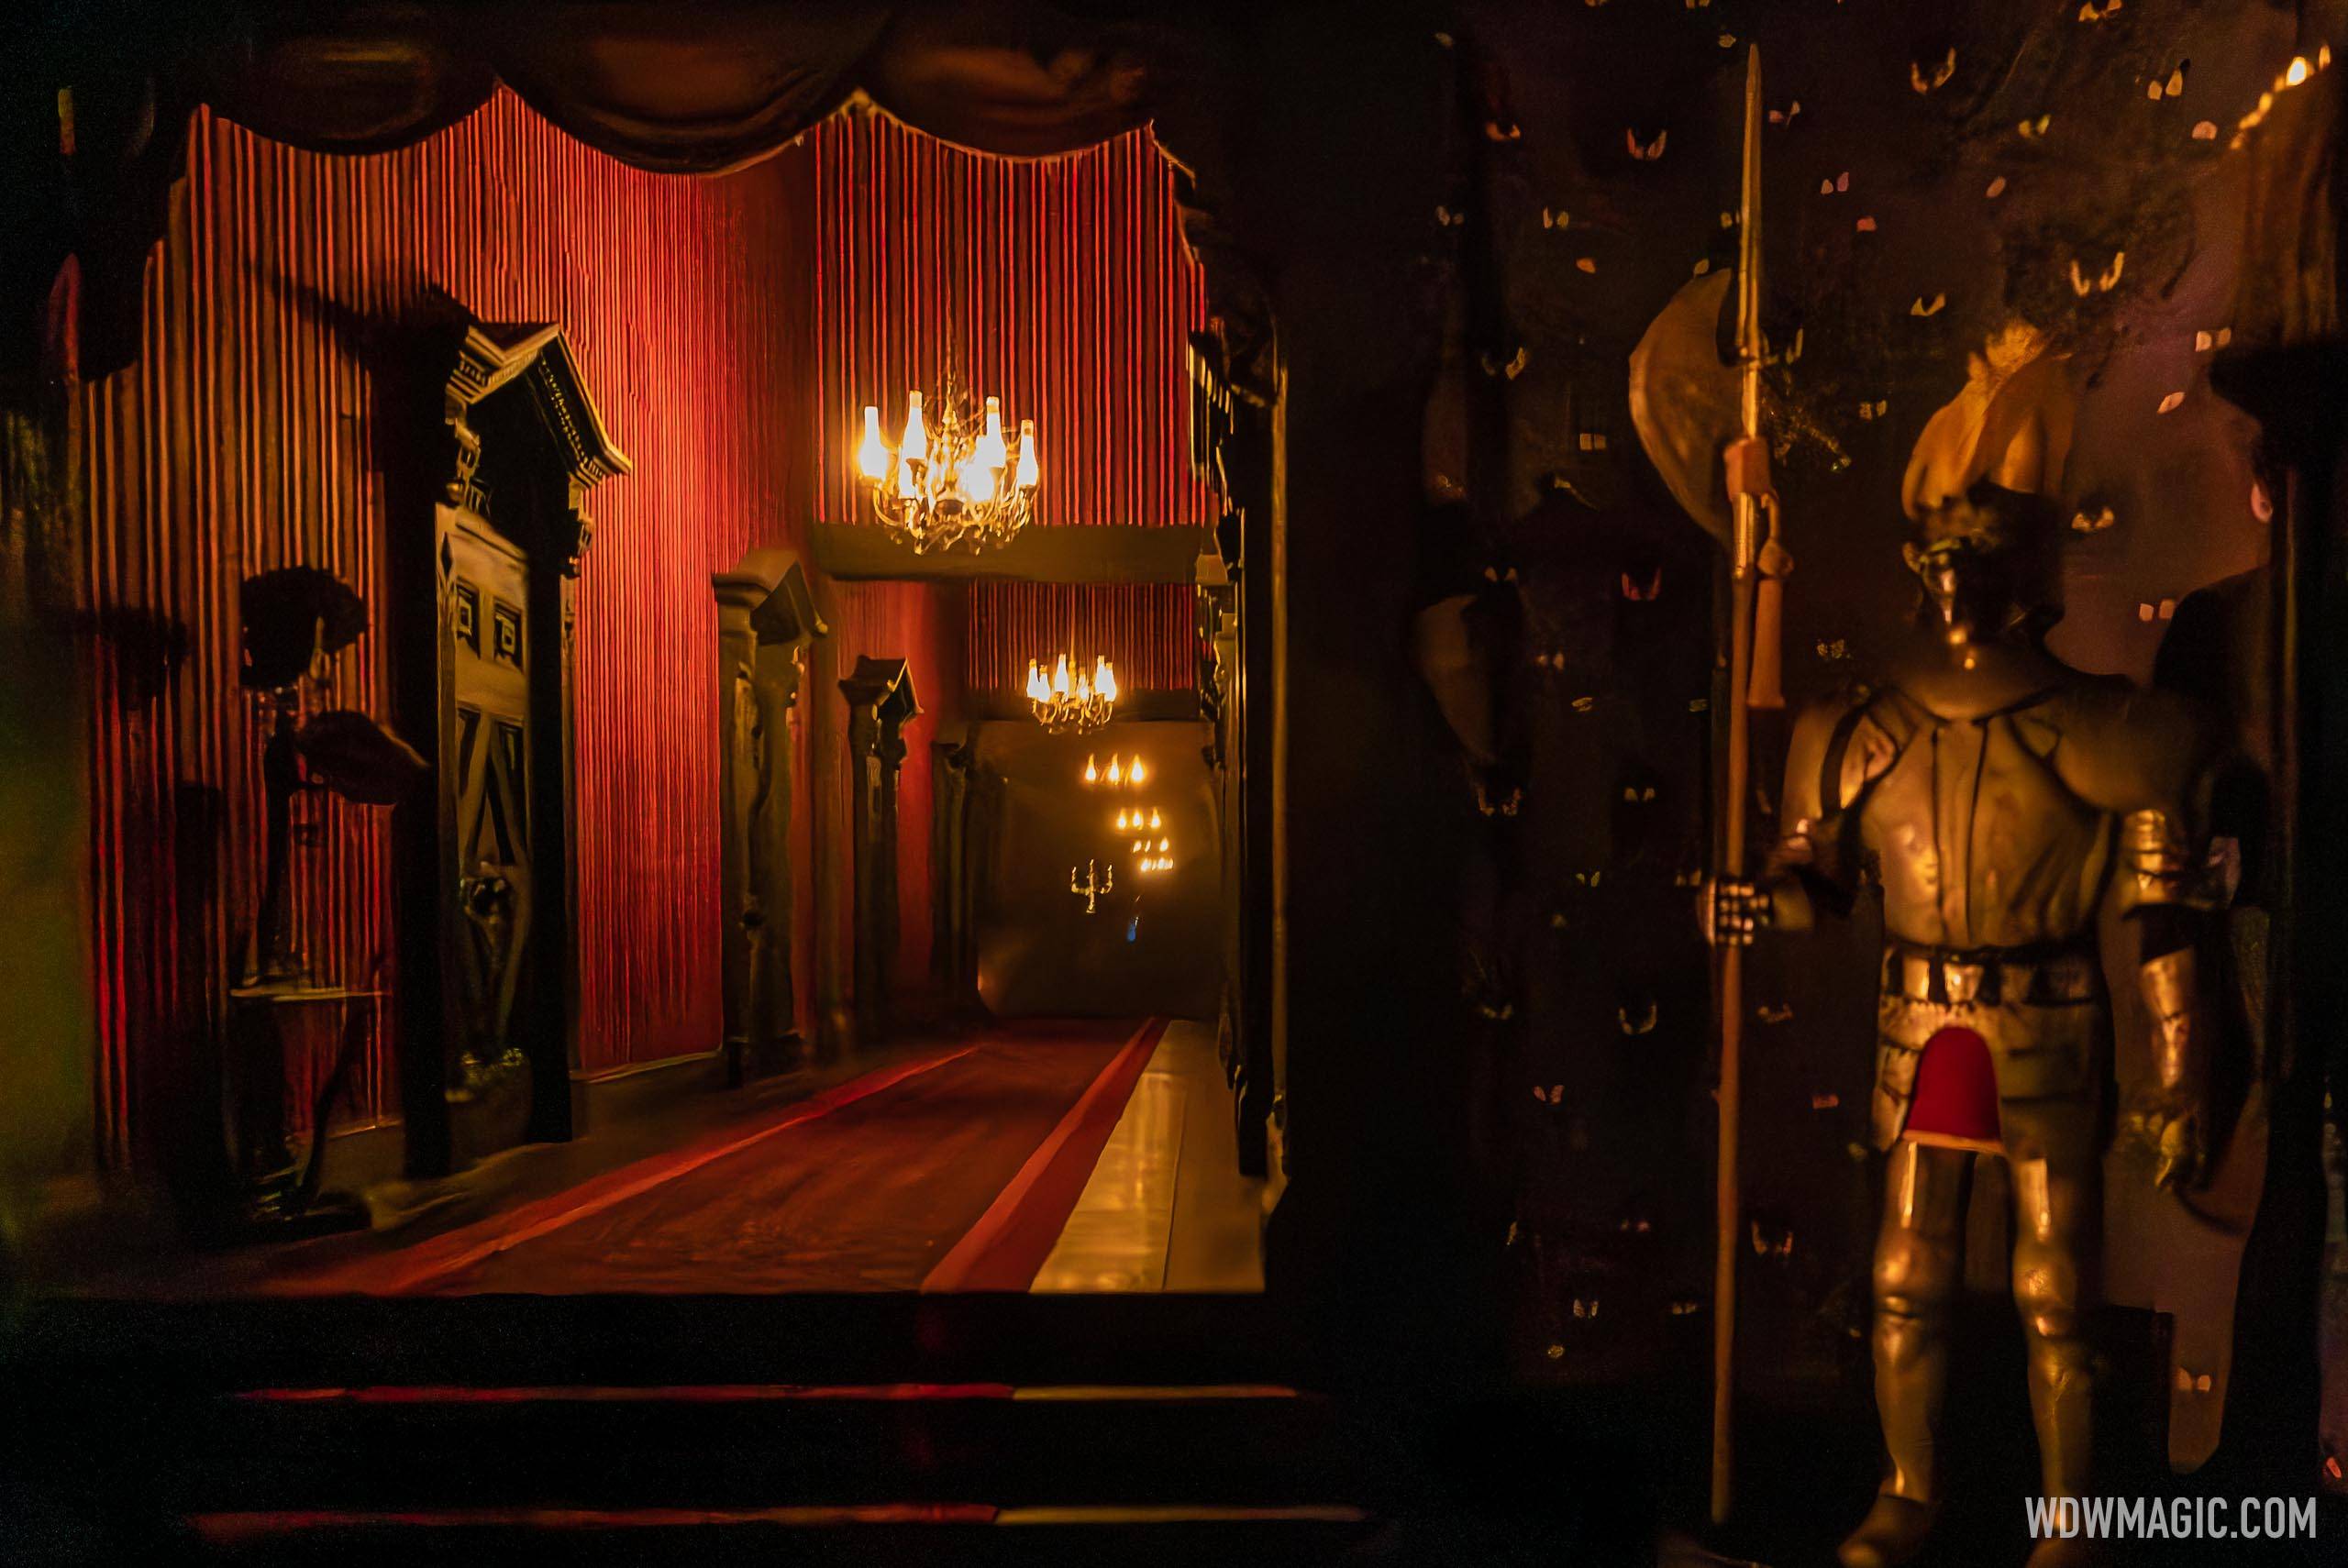 Haunted Mansion details begin to emerge